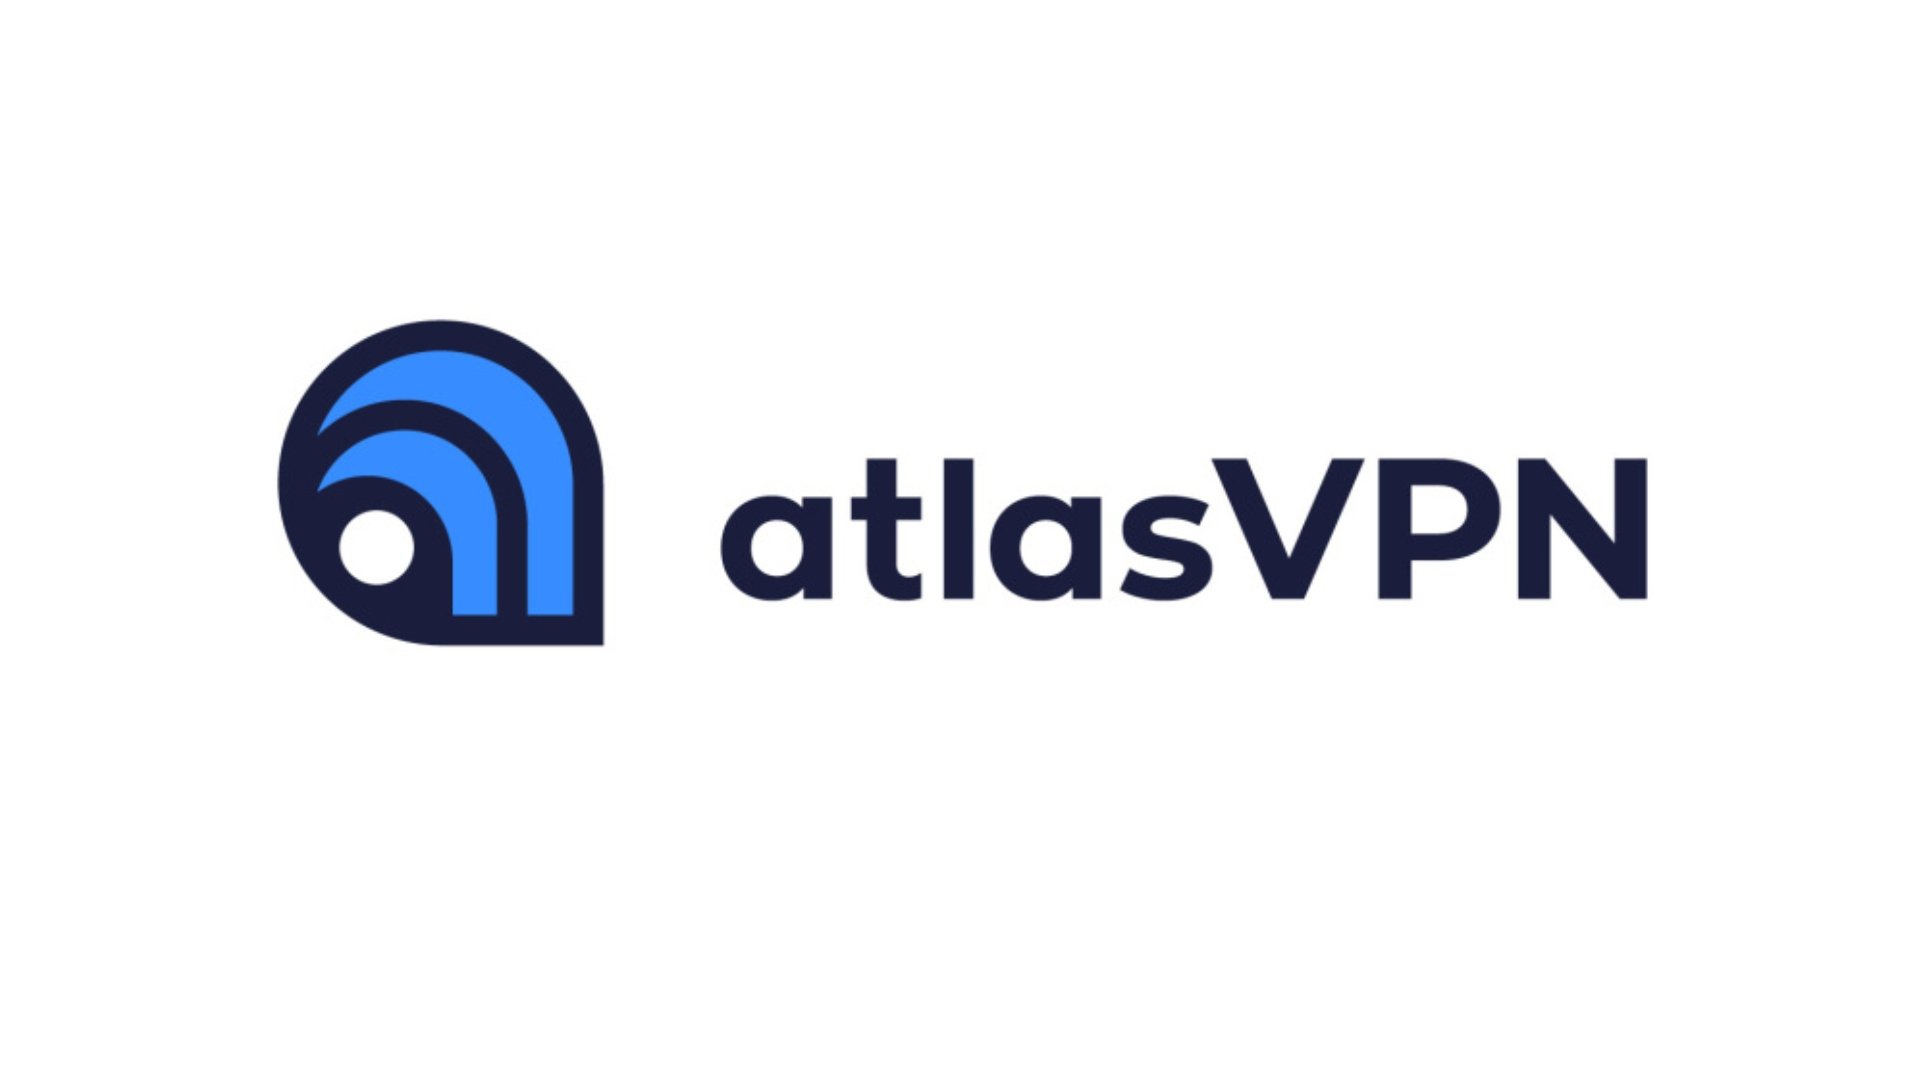 Best VPN for streaming, AtlasVPN. Image shows the company logo.